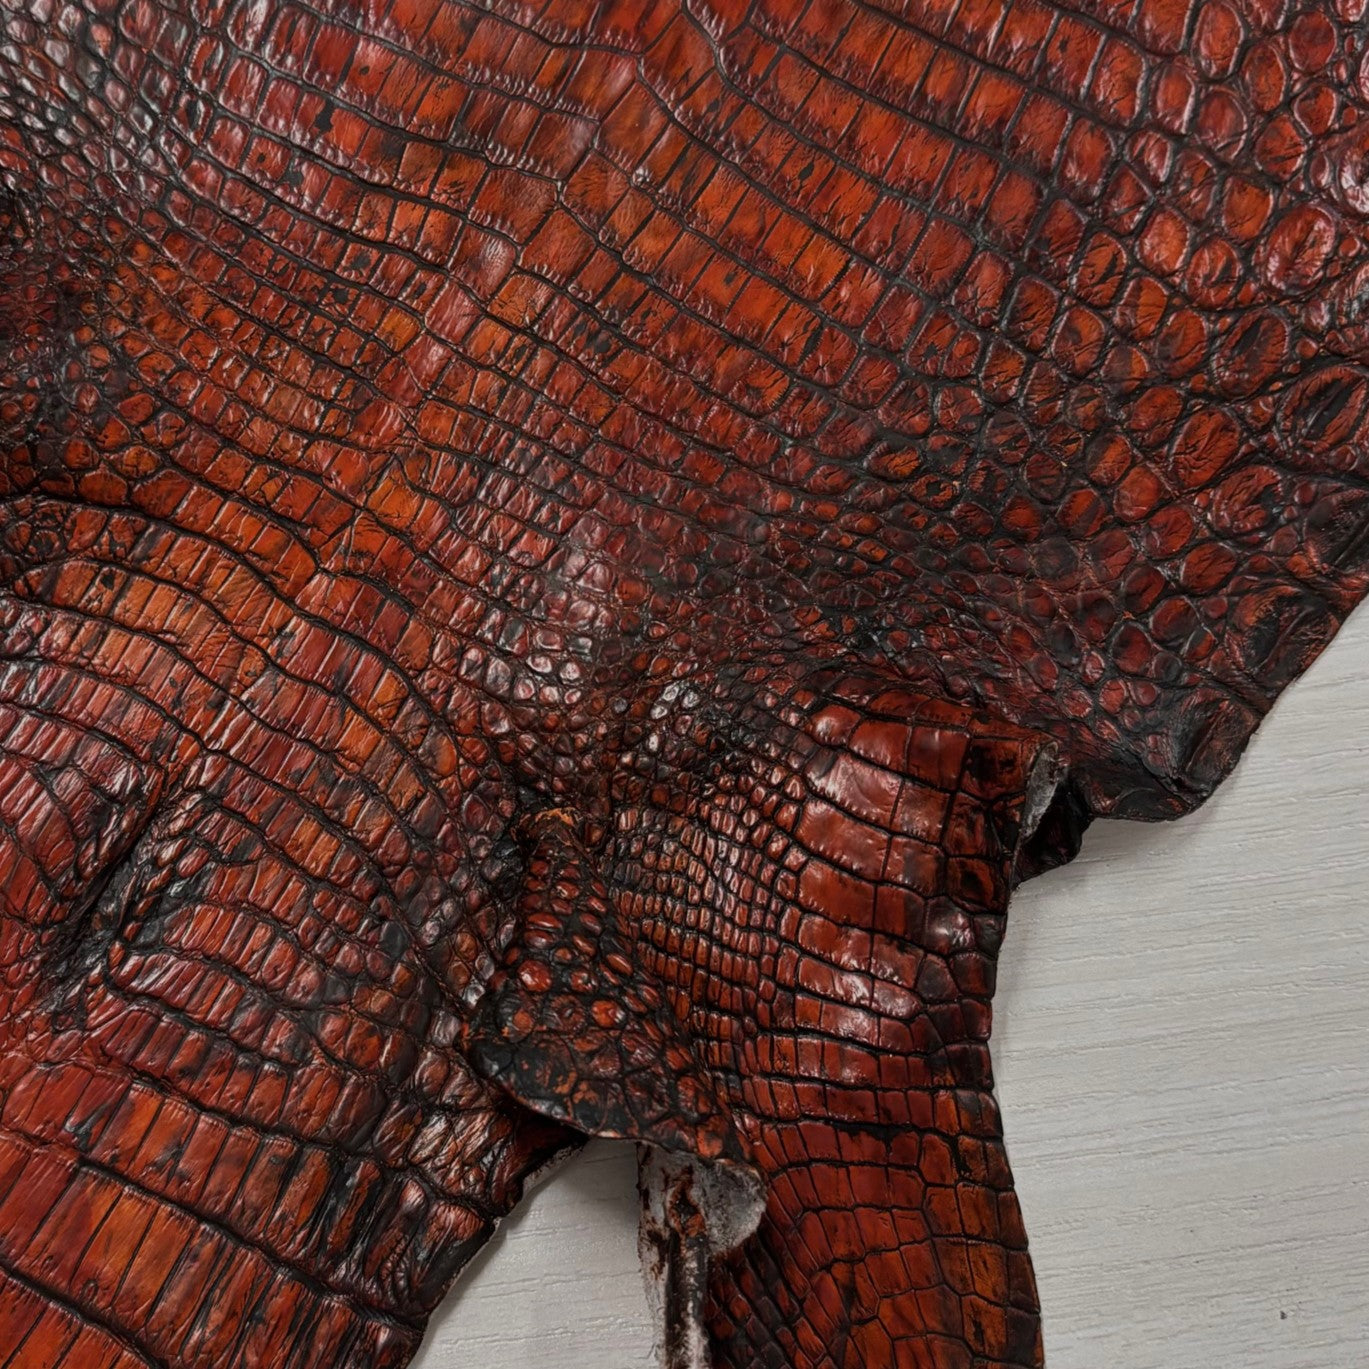 Hand-Painted Nile Crocodile #486 | 24 cm